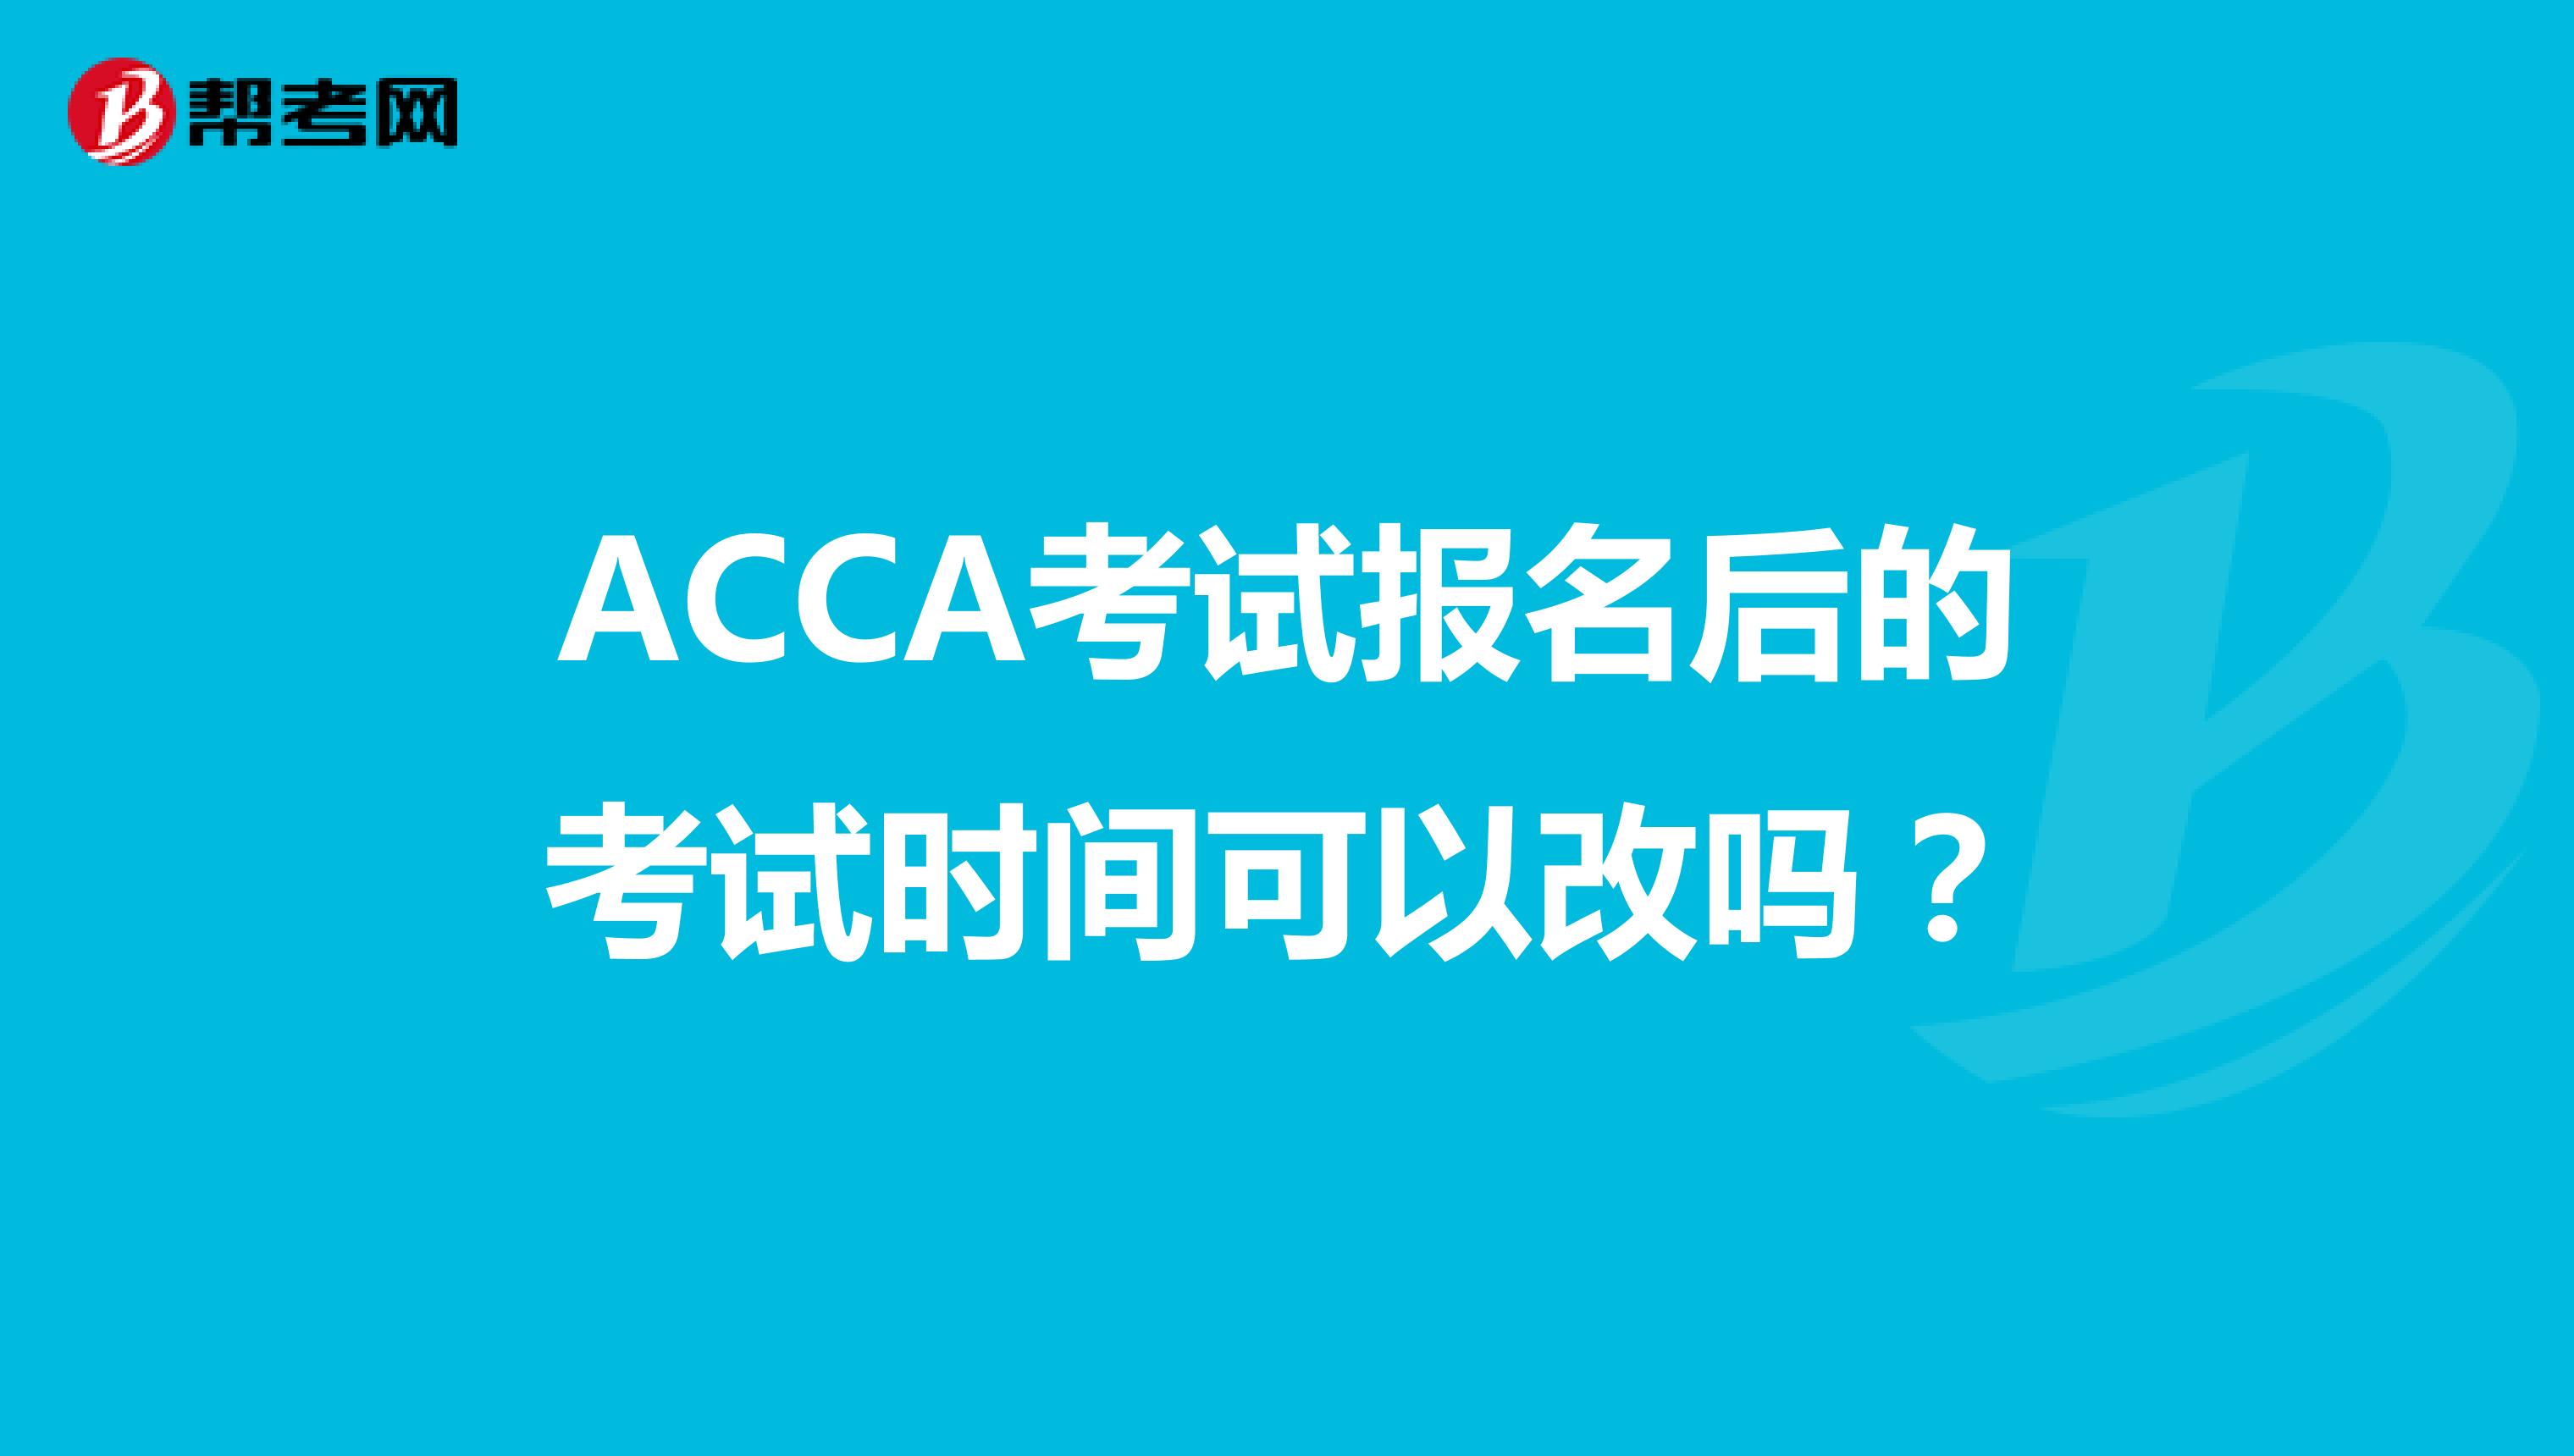 ACCA考试报名后的考试时间可以改吗？